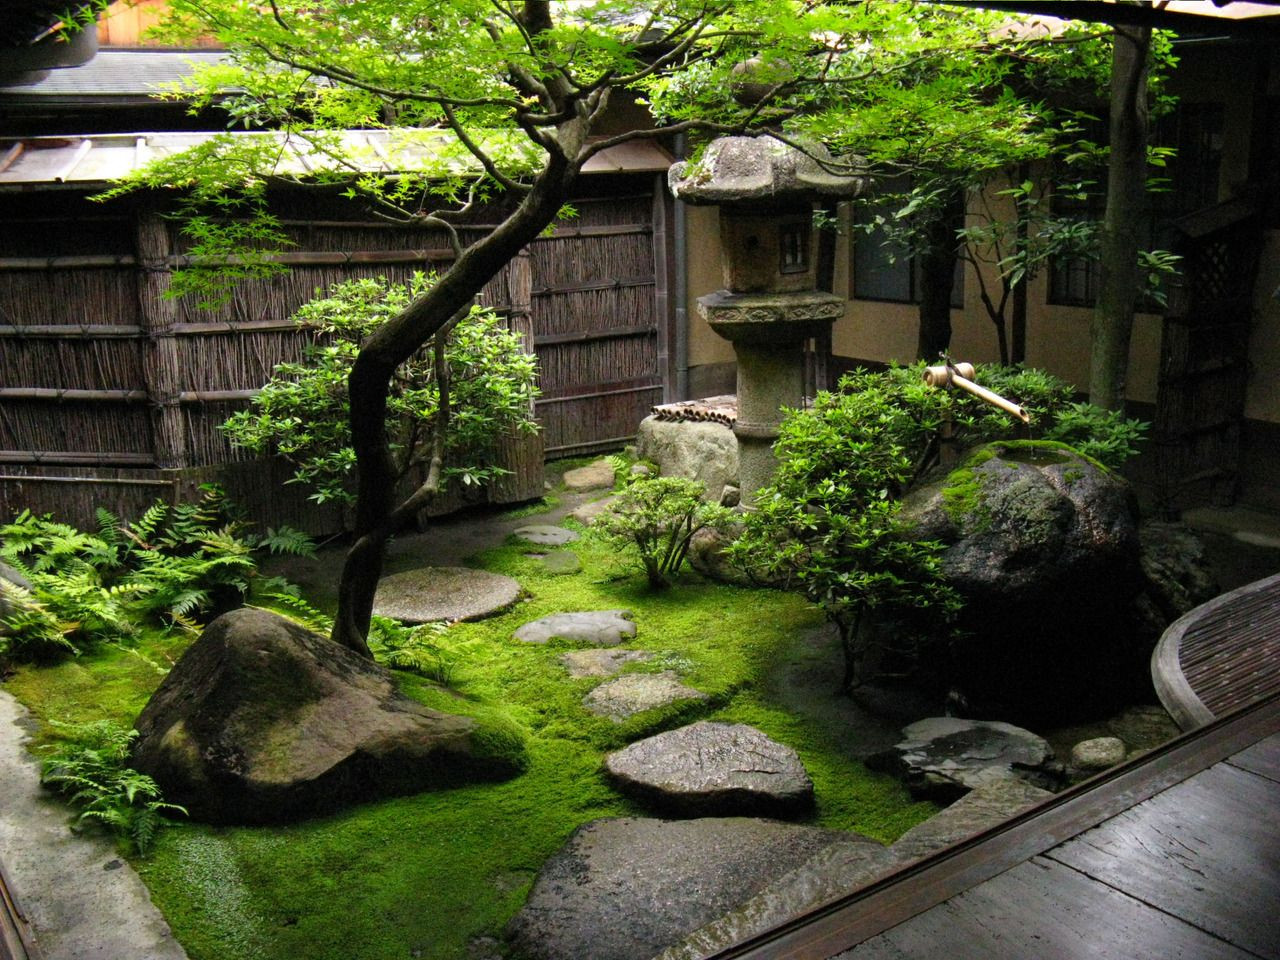 Best ideas about Japanese Garden Backyard
. Save or Pin Japanese garden garden japan Garden design Now.